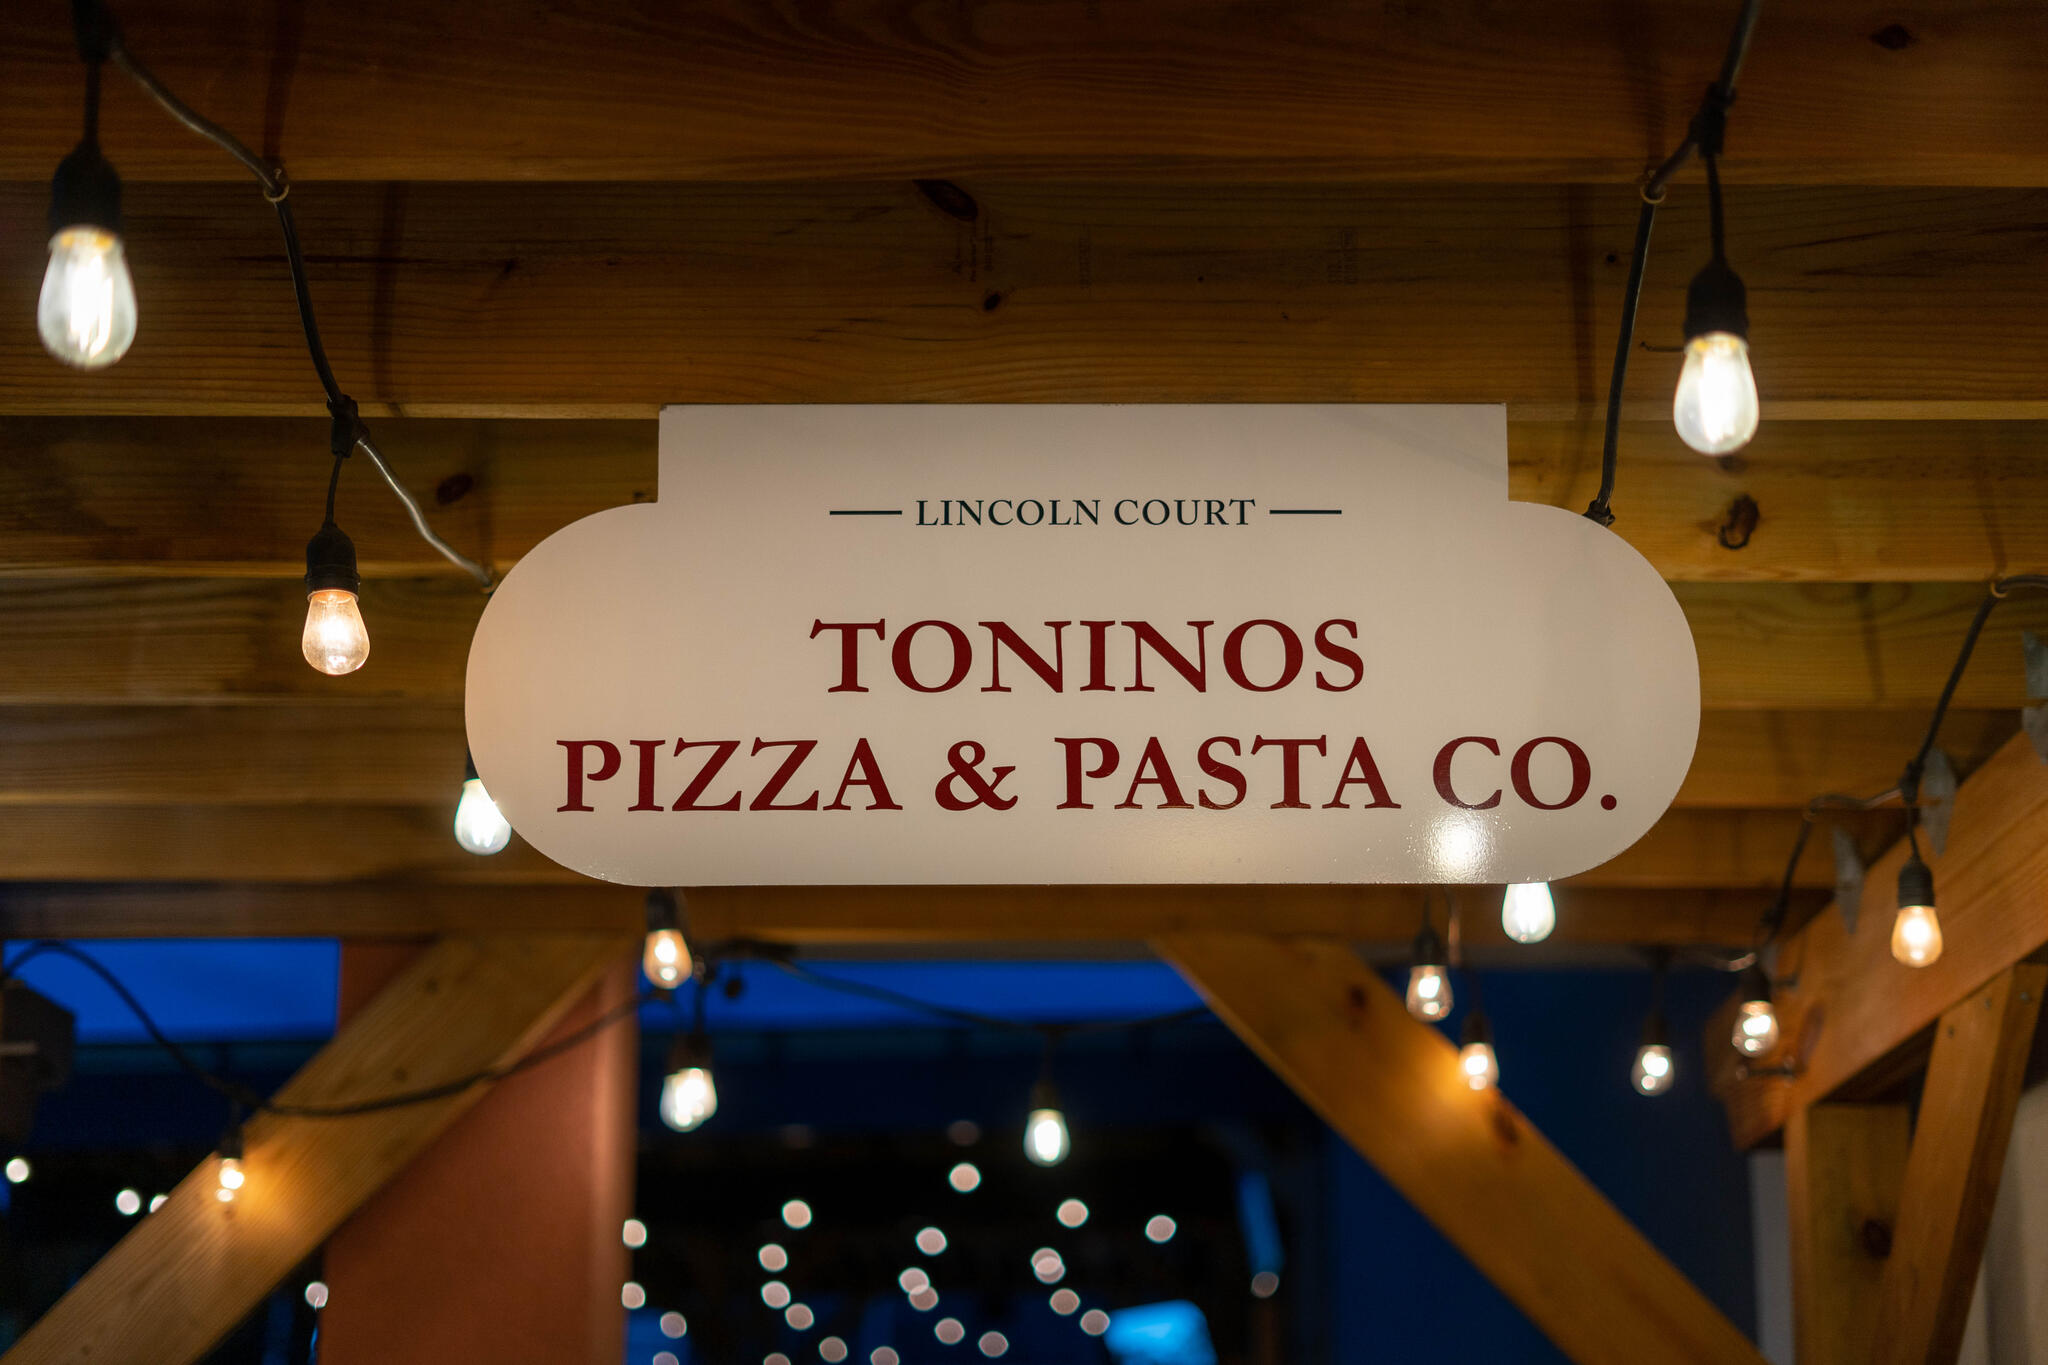 Toninos Pizza and Pasta Co